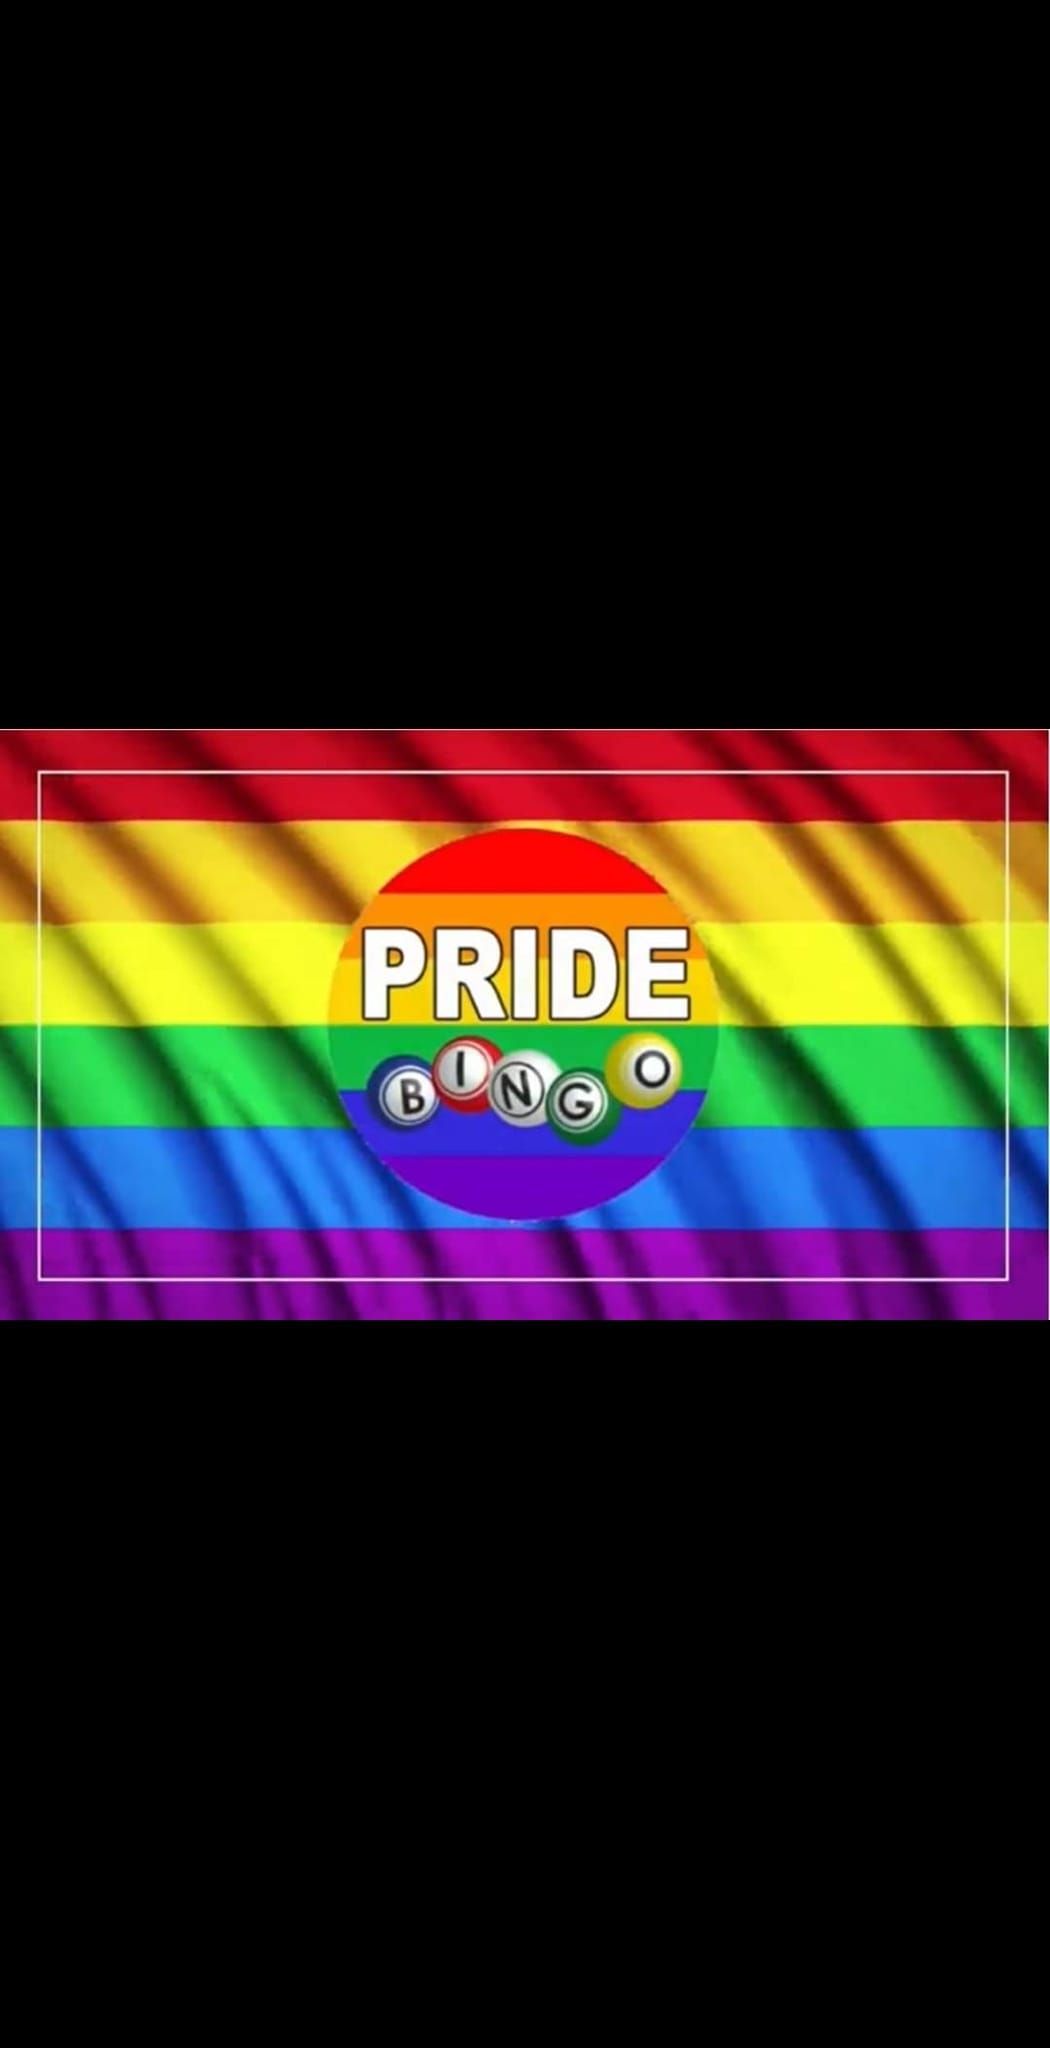 Sextember Pride Bingo!